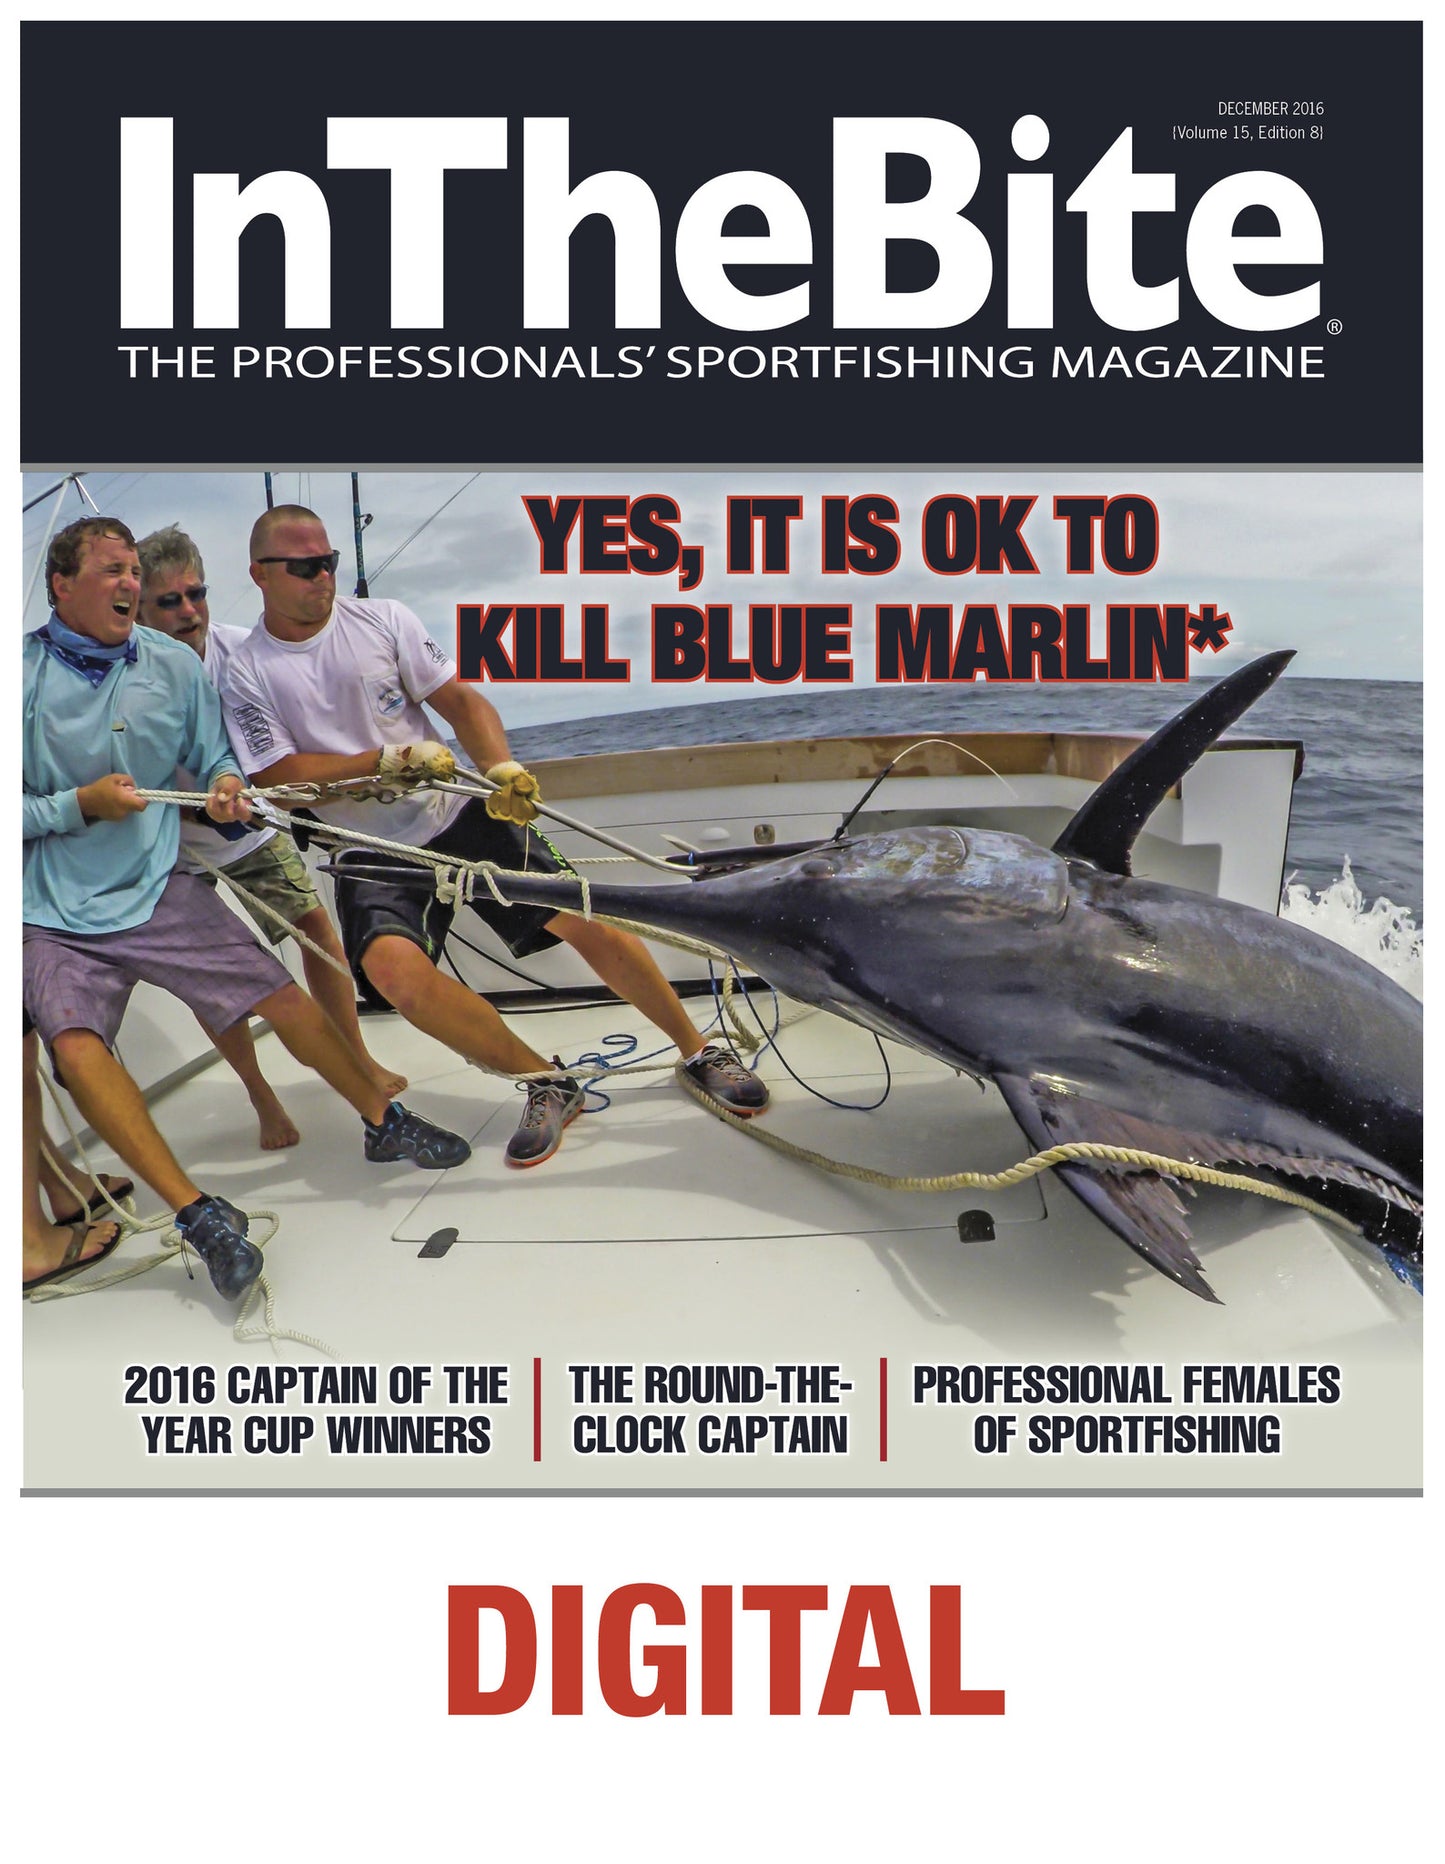 InTheBite Volume 15 Edition 08 - December 2016 - Digital Edition